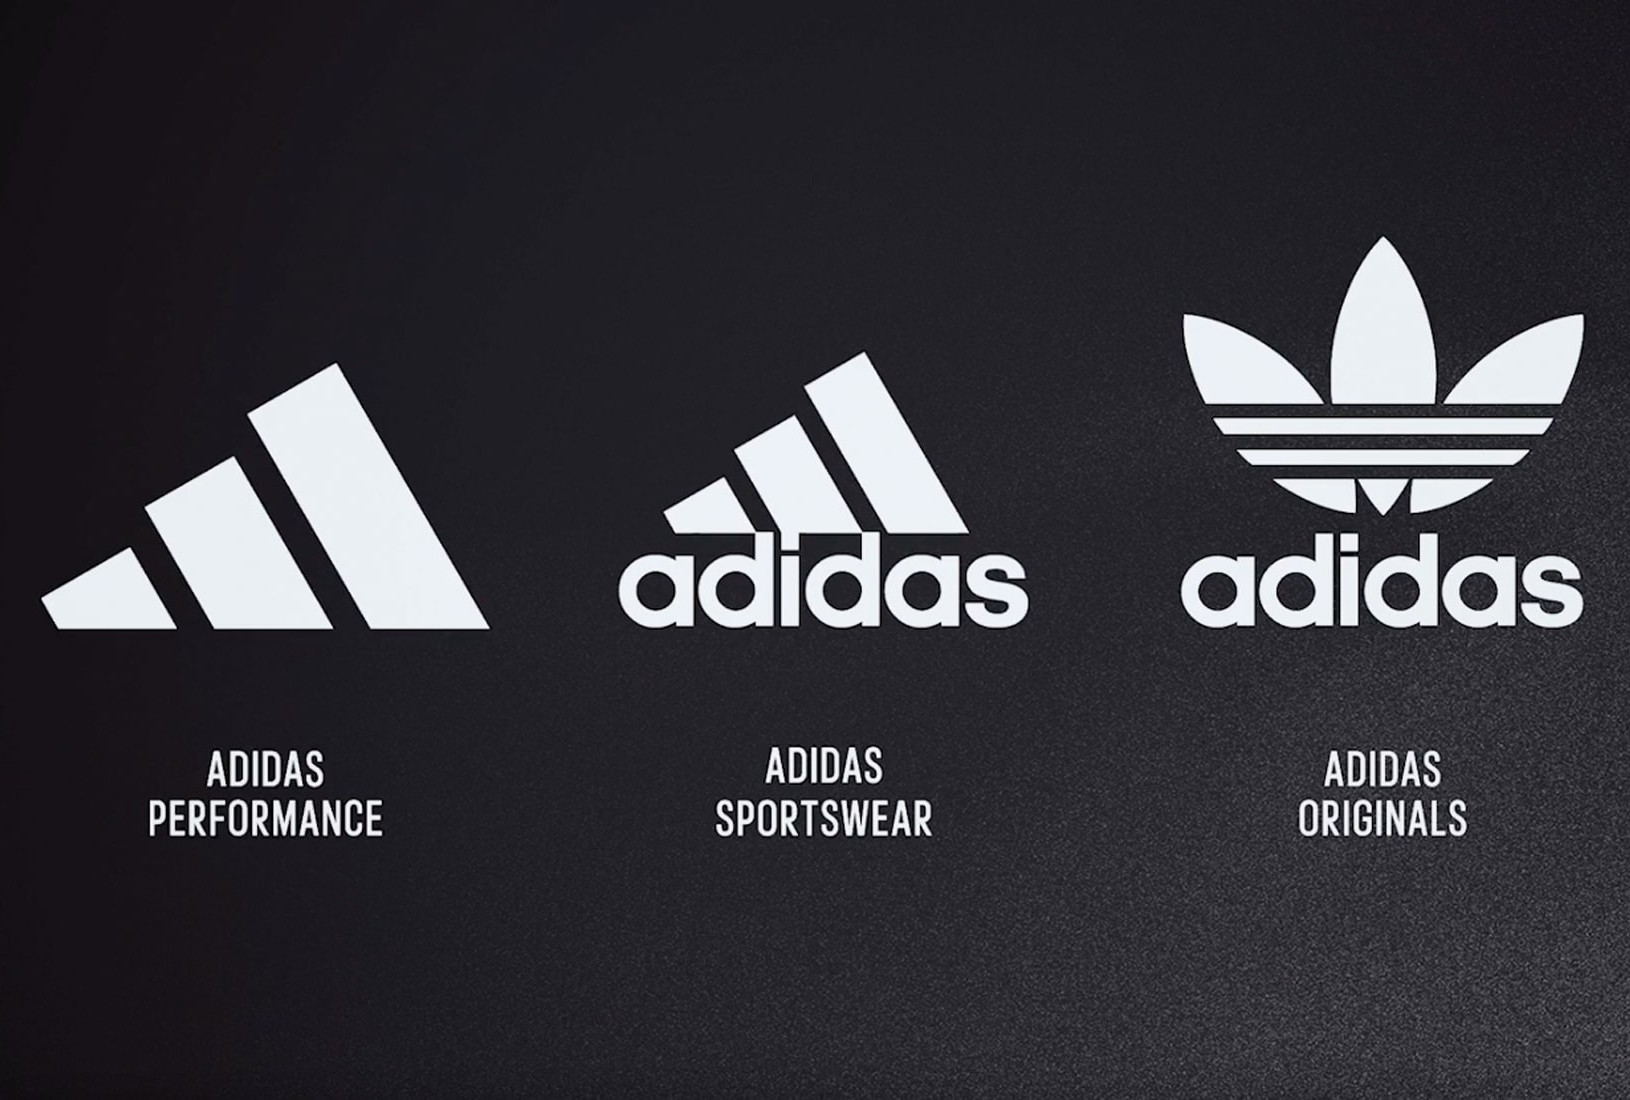 chocola George Eliot bad Nieuw adidas logo op voetbalshirts vanaf 2022 - Voetbalshirts.com